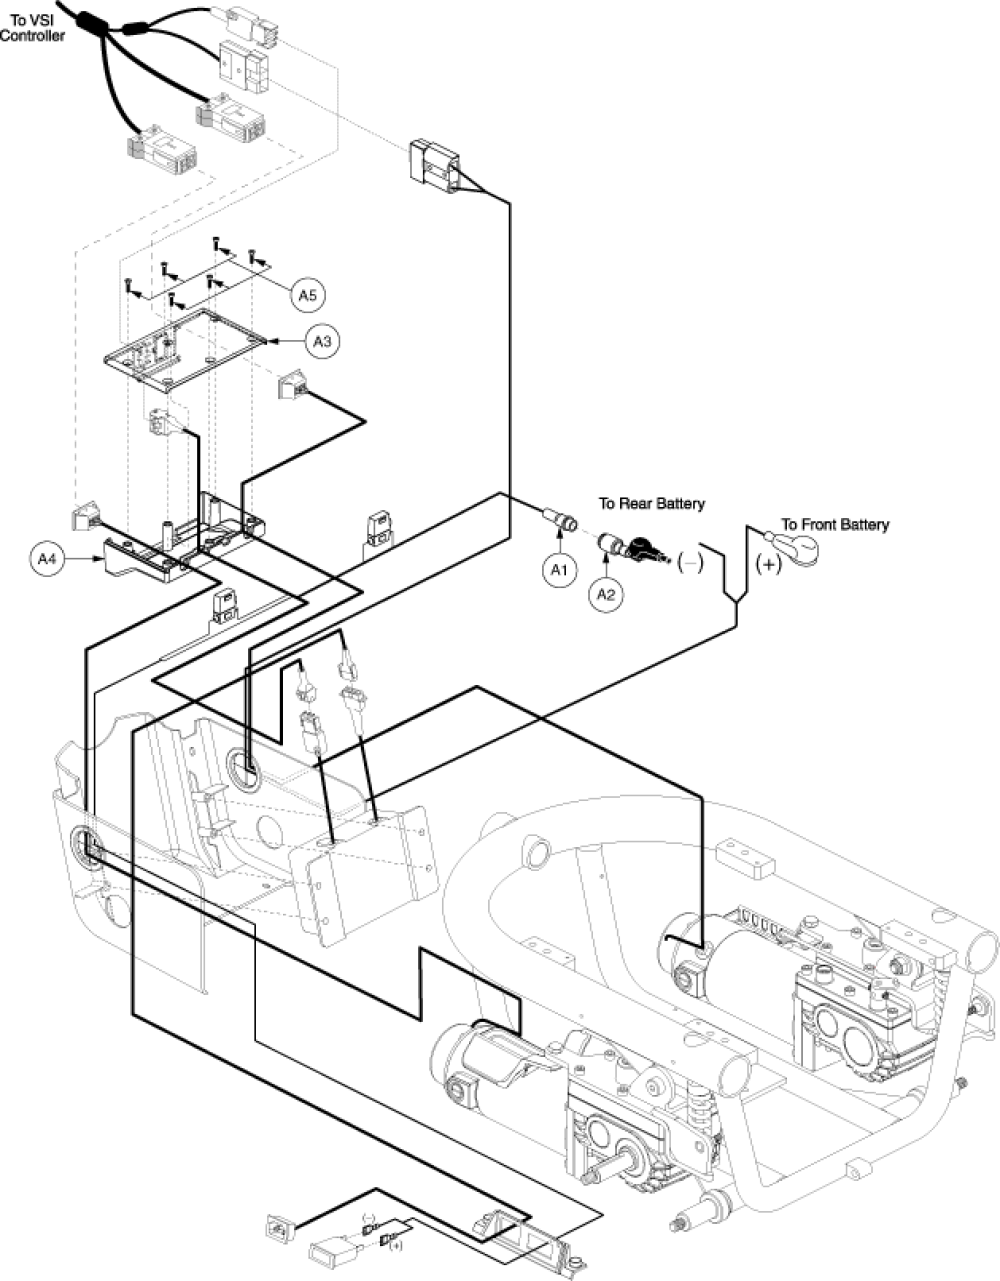 Electronics Assembly - Vsi, Qr, Onboard parts diagram